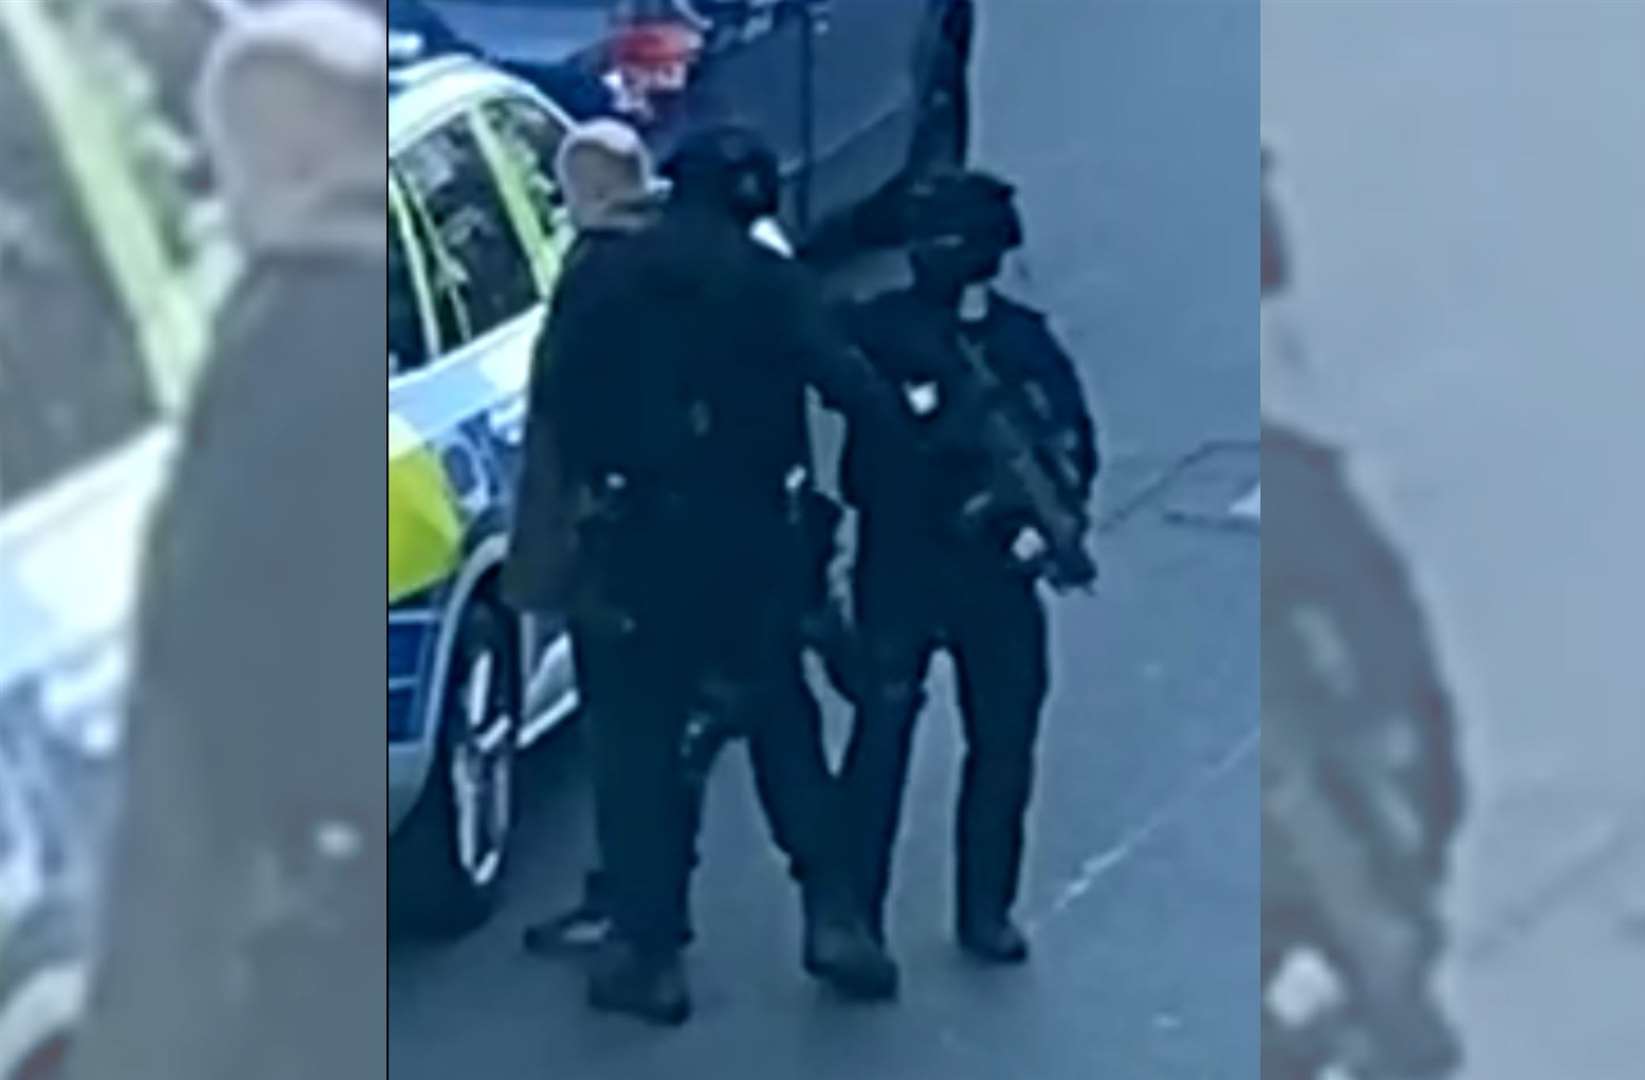 Armed police arrest a suspect in Tontine Street, Folkestone